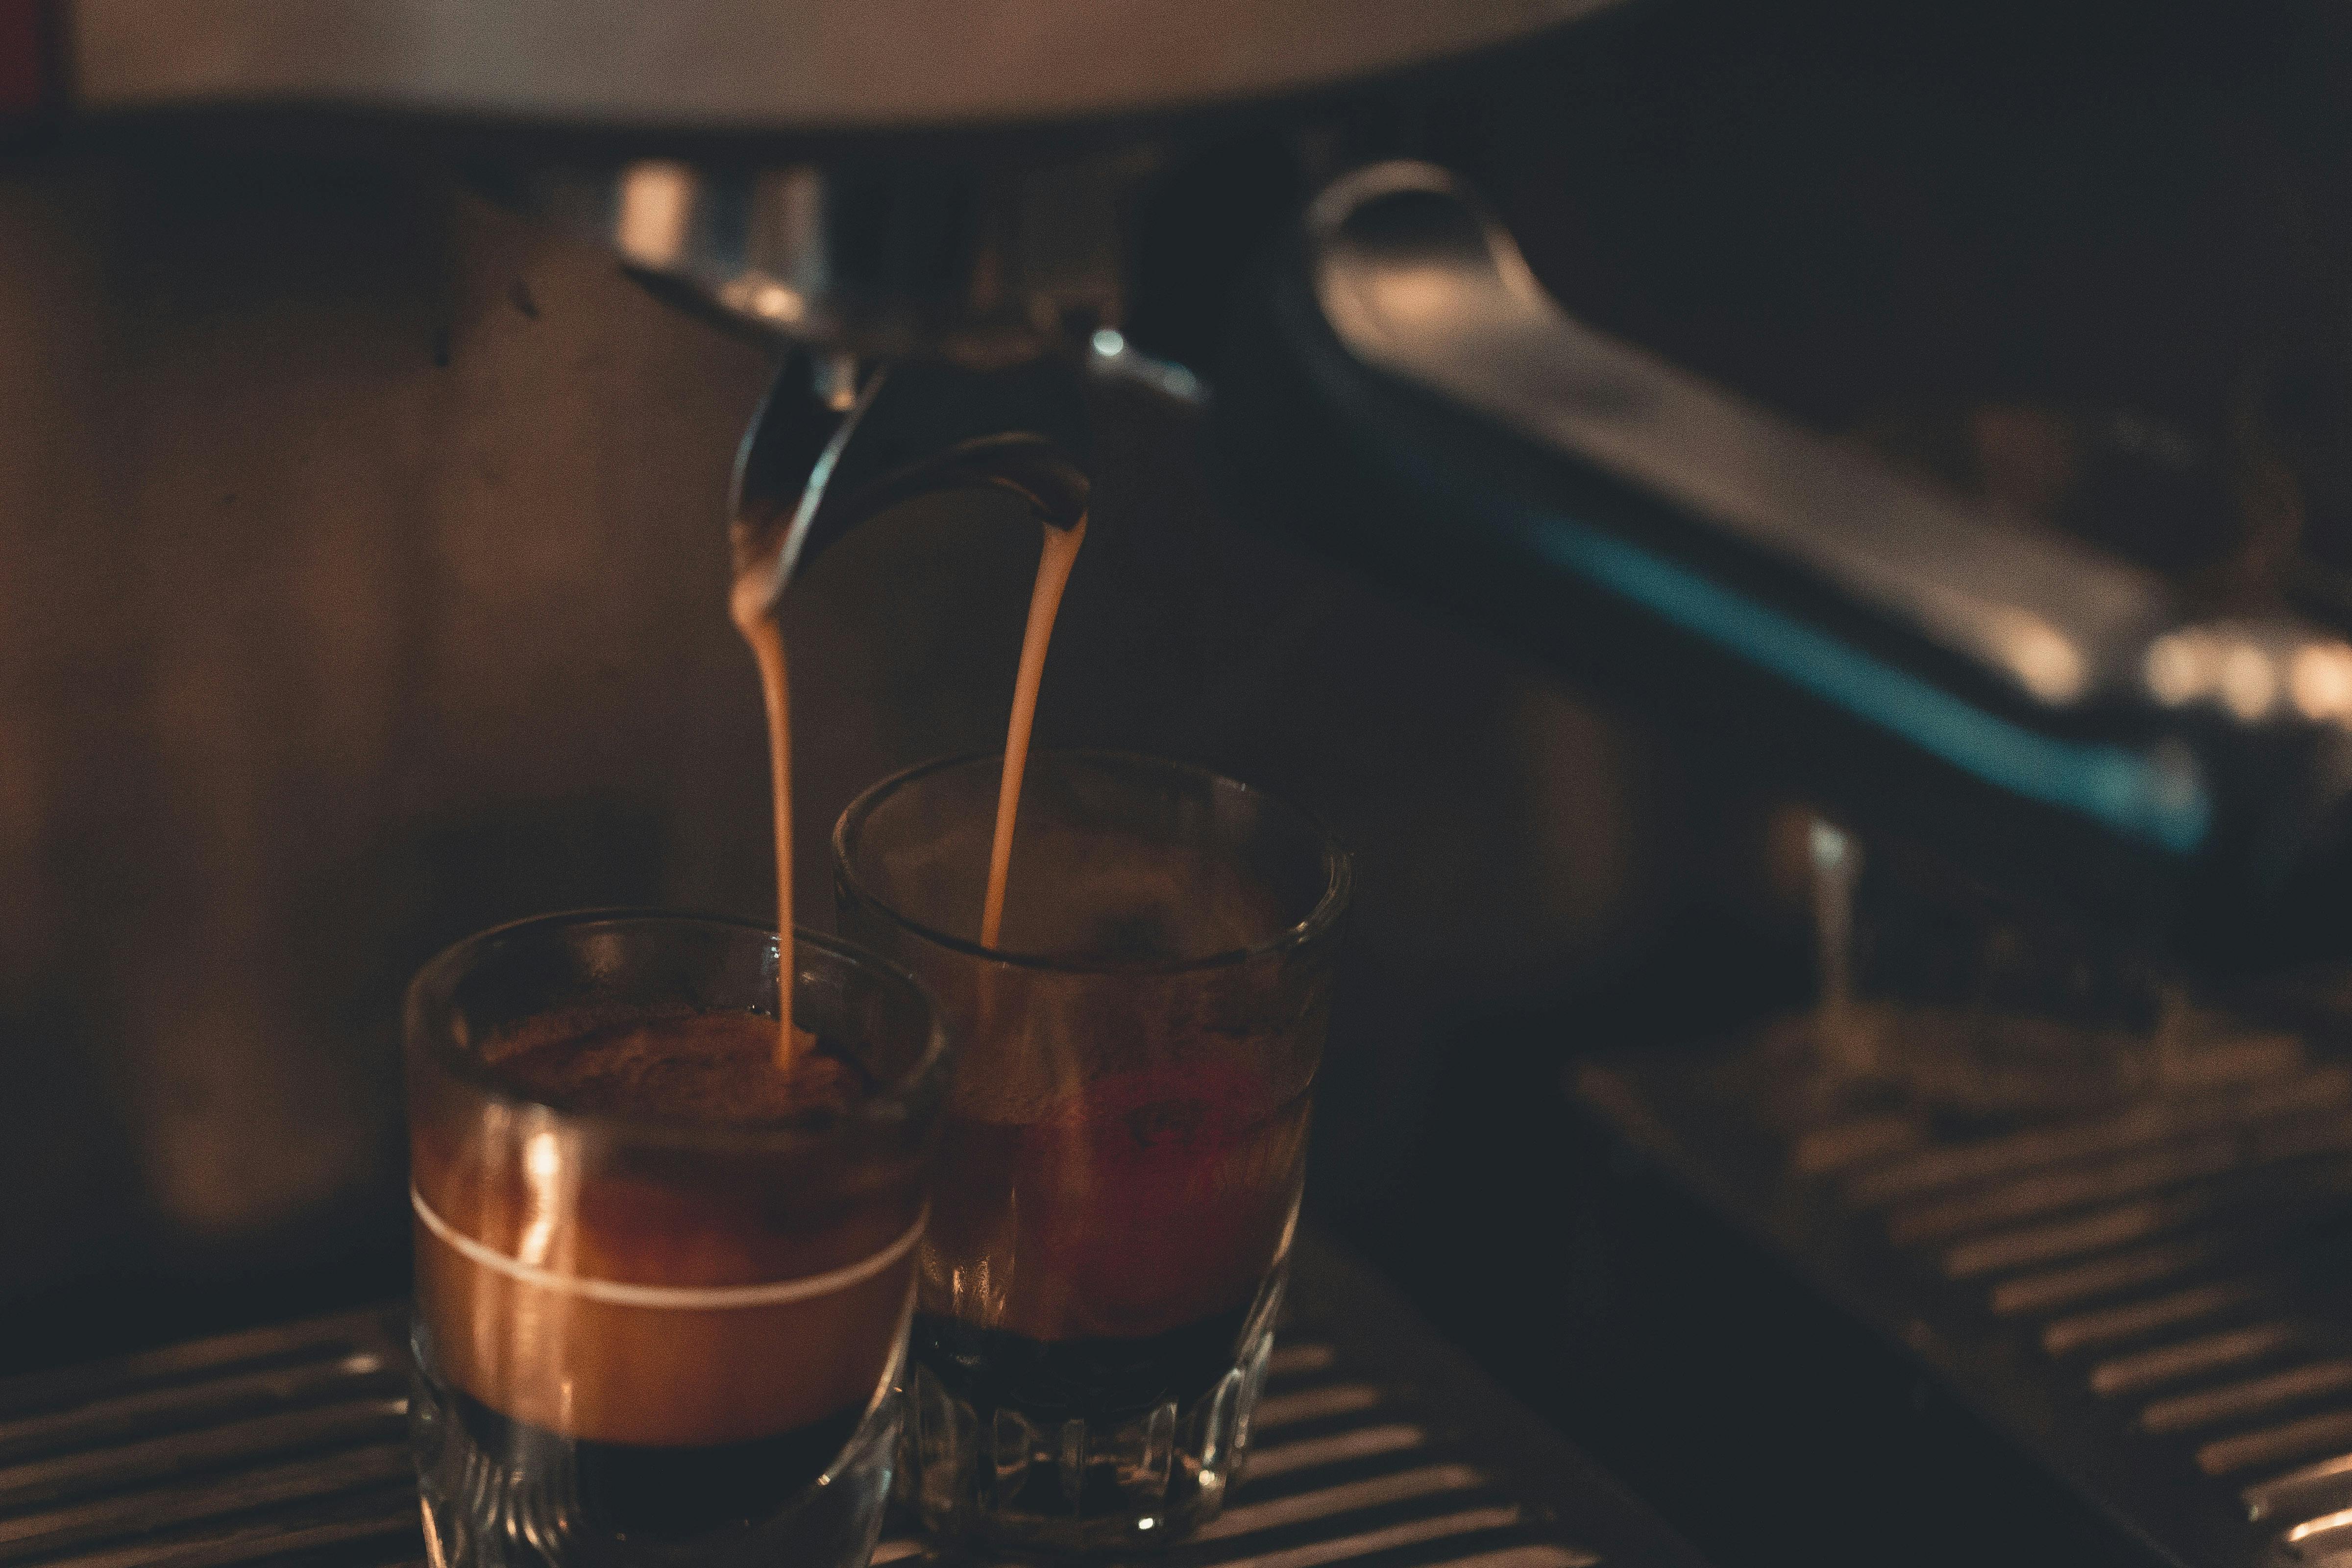 30,000+ Best Coffee Photos · 100% Free Download · Pexels Stock Photos